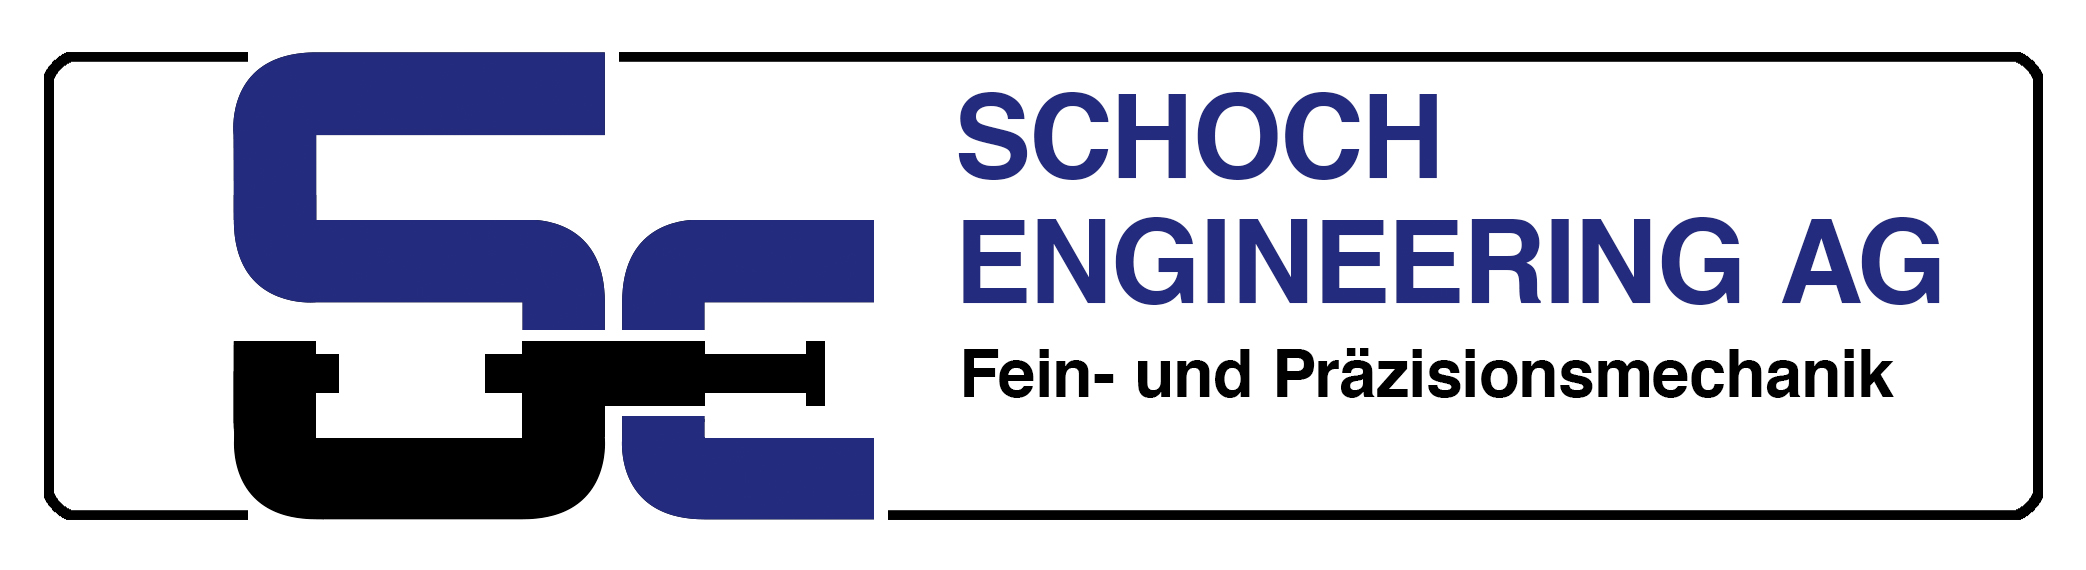 Schoch Engineering AG